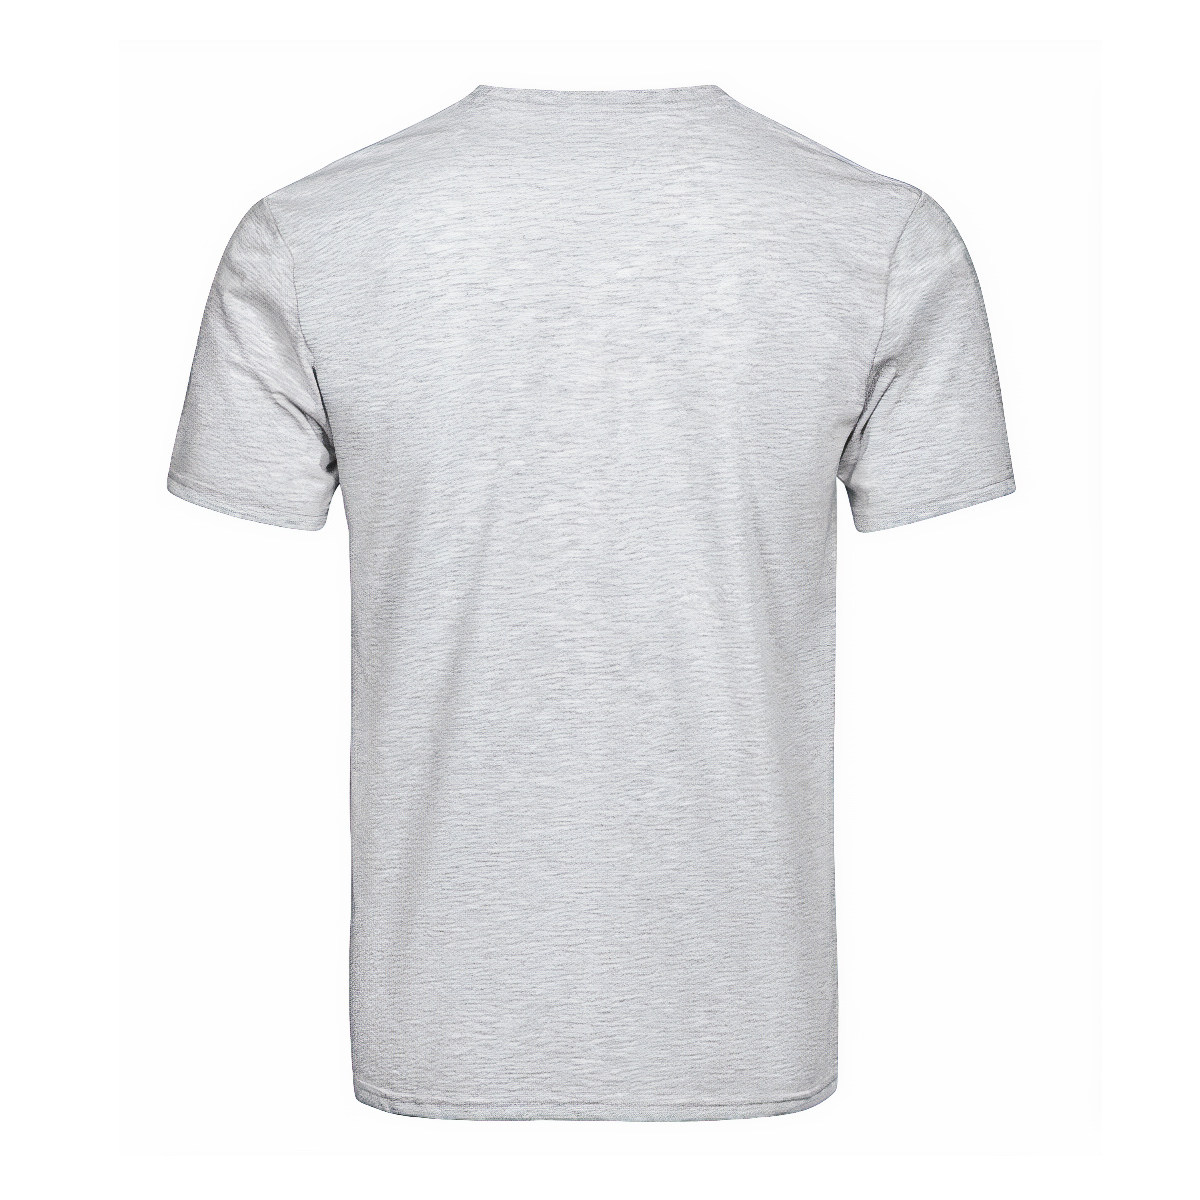 Mercer Tartan Crest T-shirt - I'm not yelling style